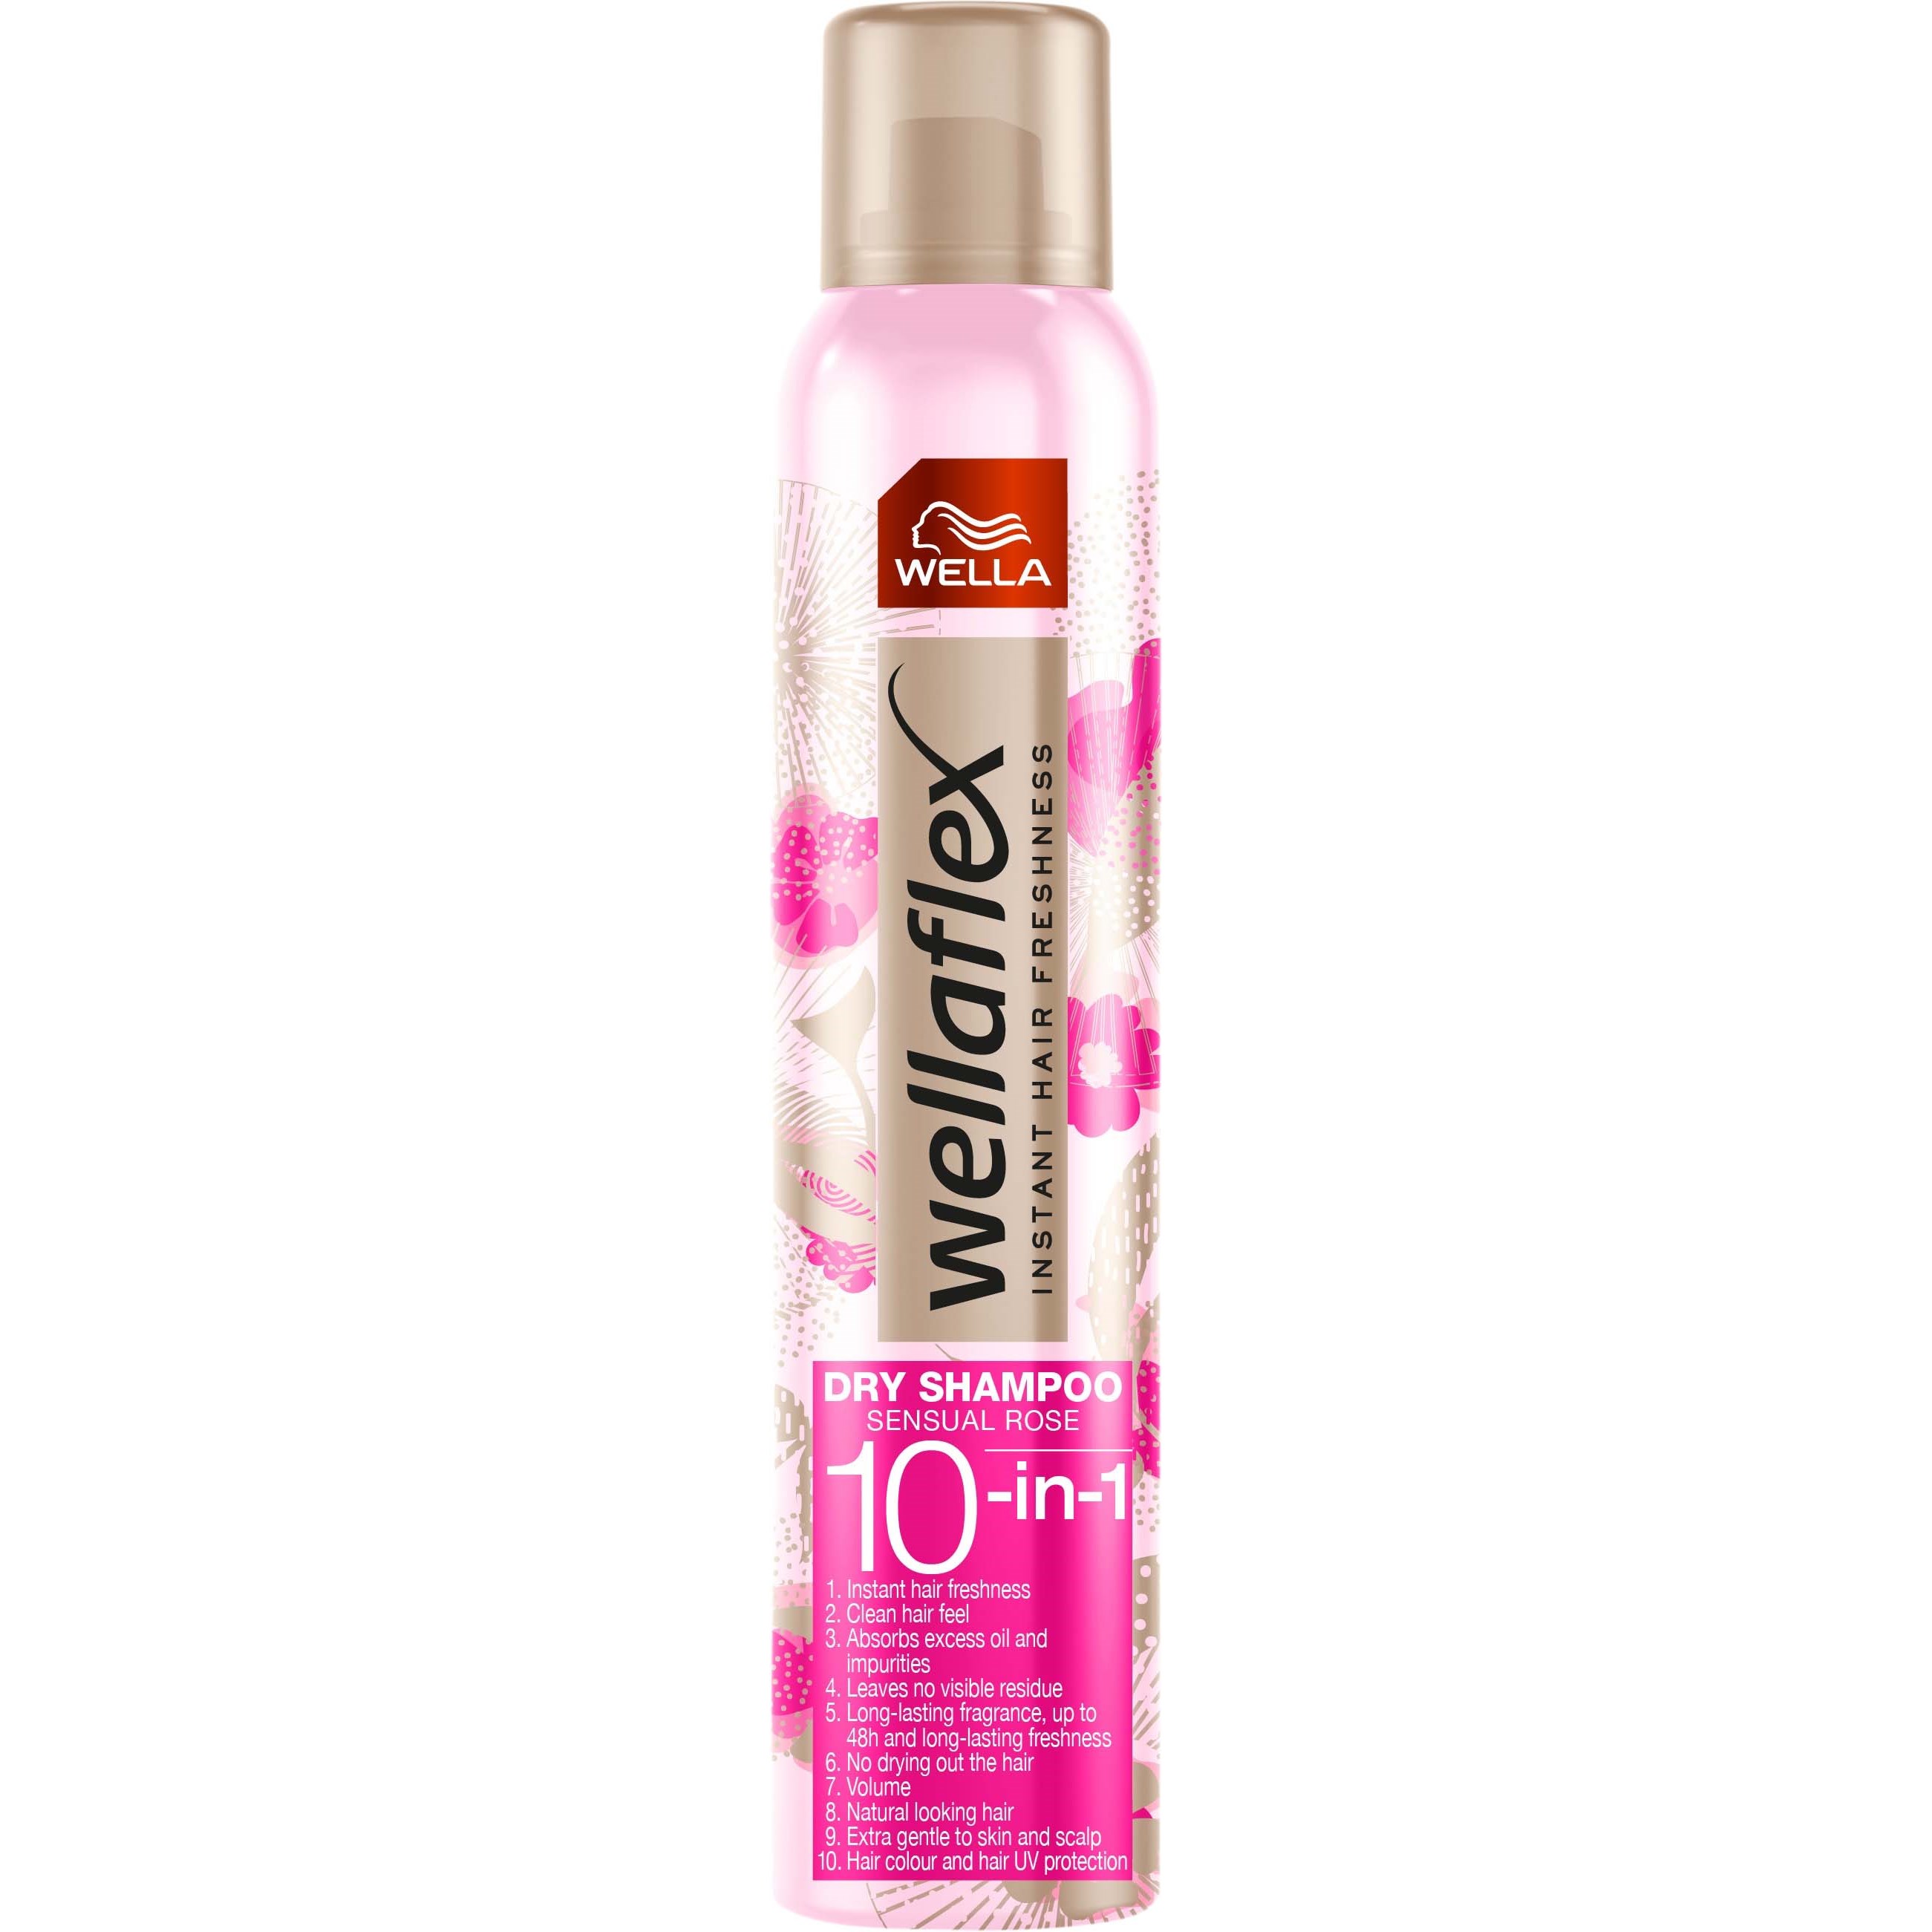 Фото - Шампунь Wella Styling Wellaflex Dry Shampoo Sensual Rose 180 ml 